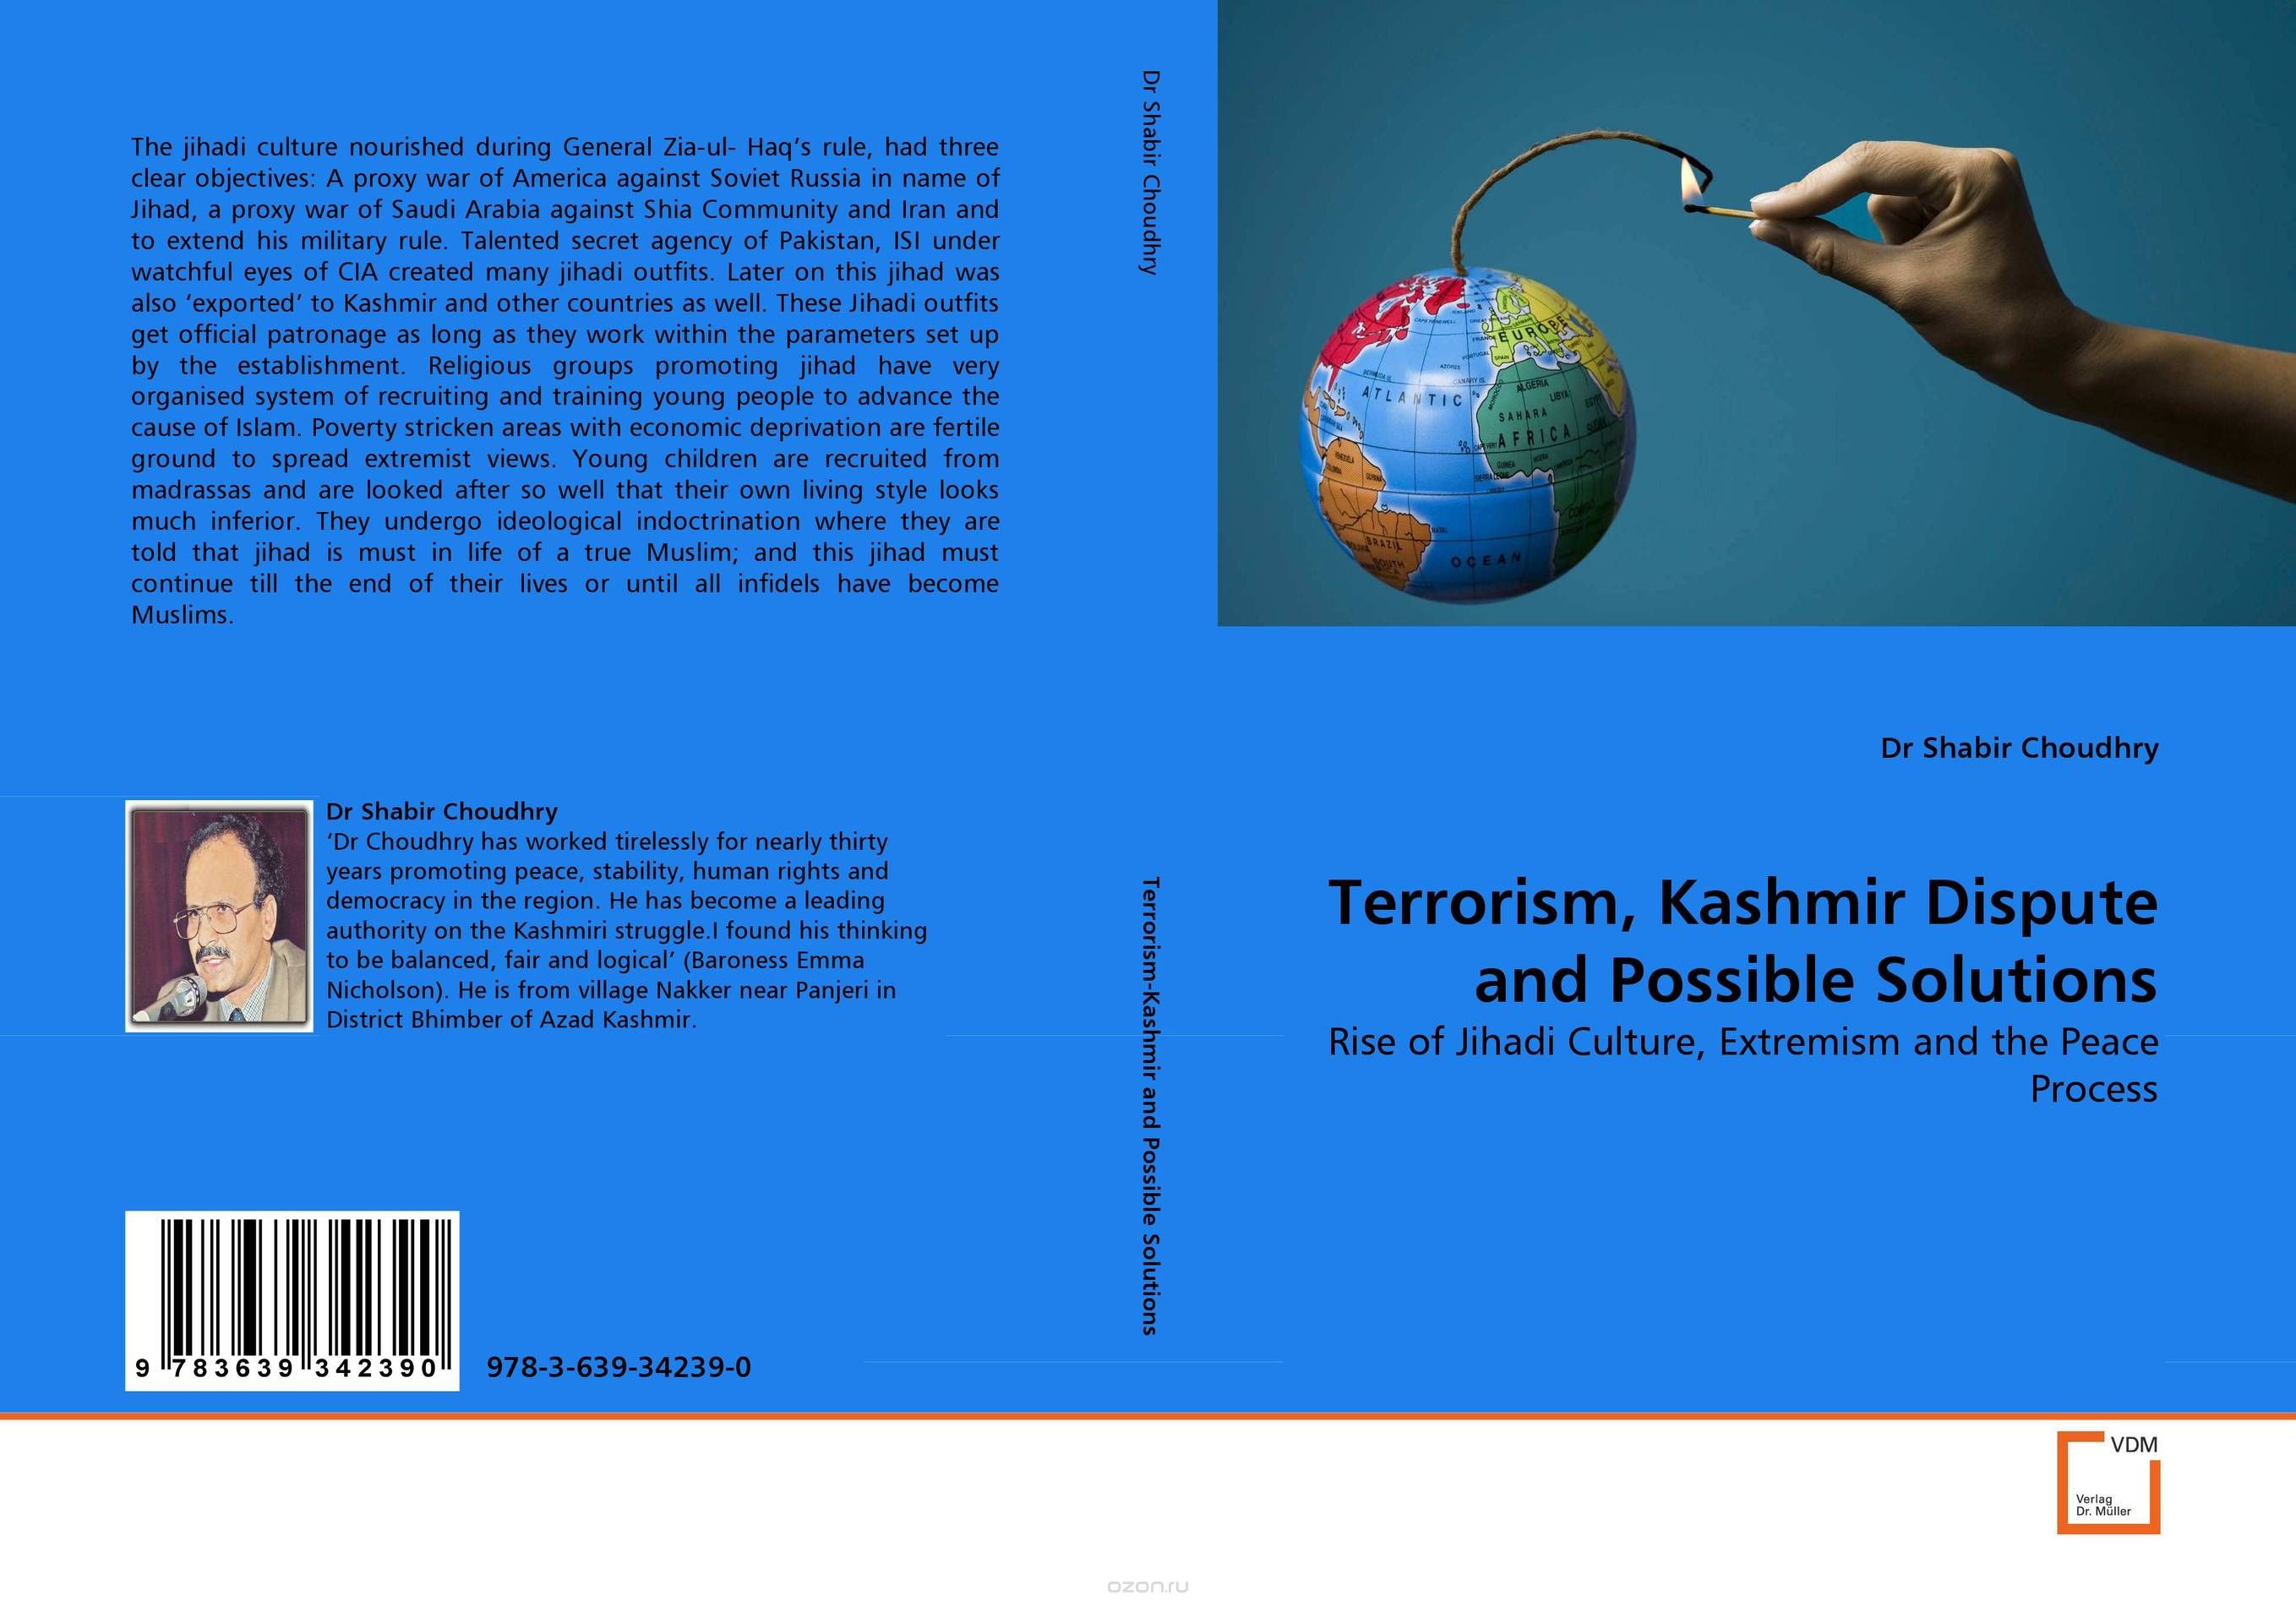 Скачать книгу "Terrorism, Kashmir Dispute and Possible Solutions"